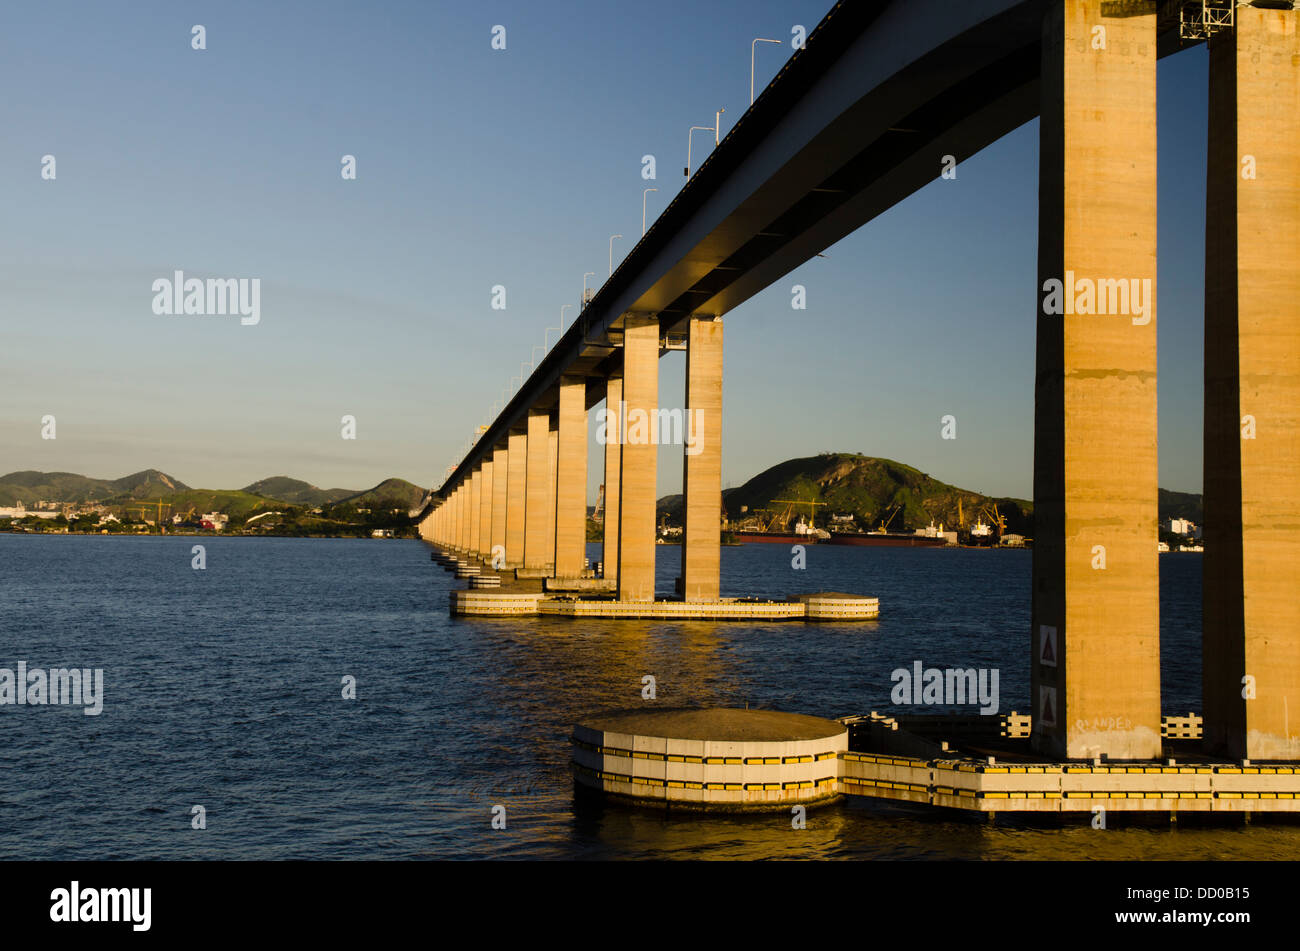 Rio Niteroy Bridge, One of the biggest bridges in the world, crossing Guanabara Bay, Rio de Janeiro, Brazil Stock Photo